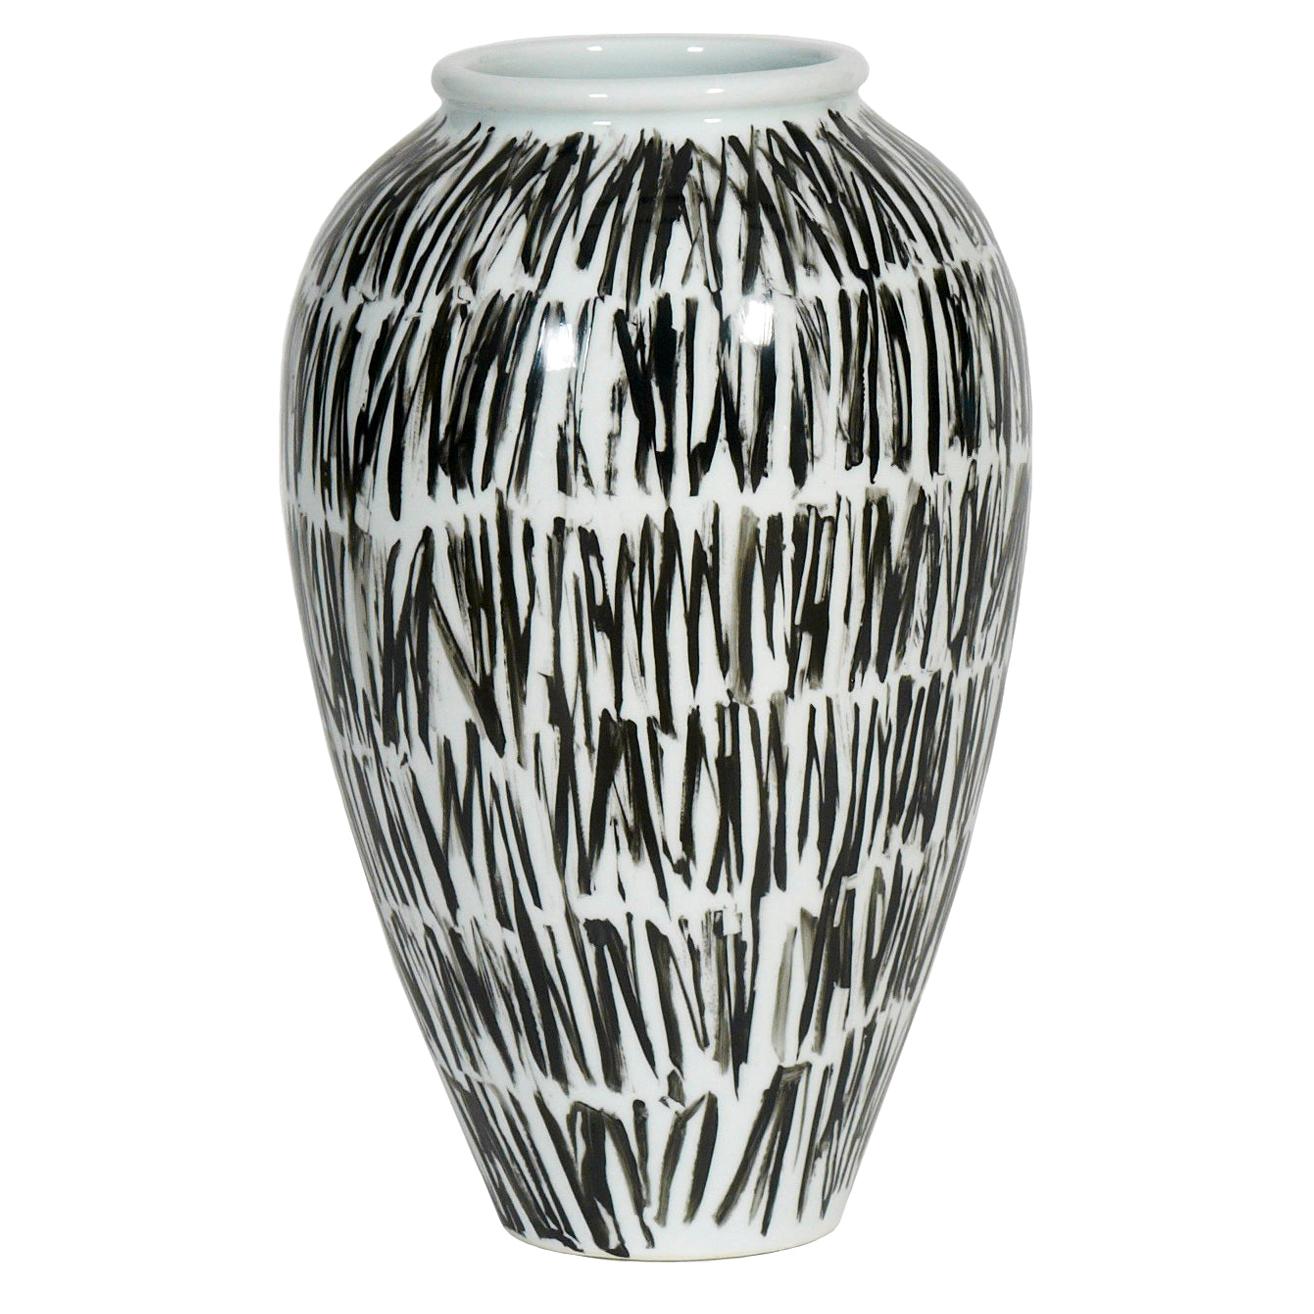 Colette Porcelain Vase in Black and White Pattern by CuratedKravet